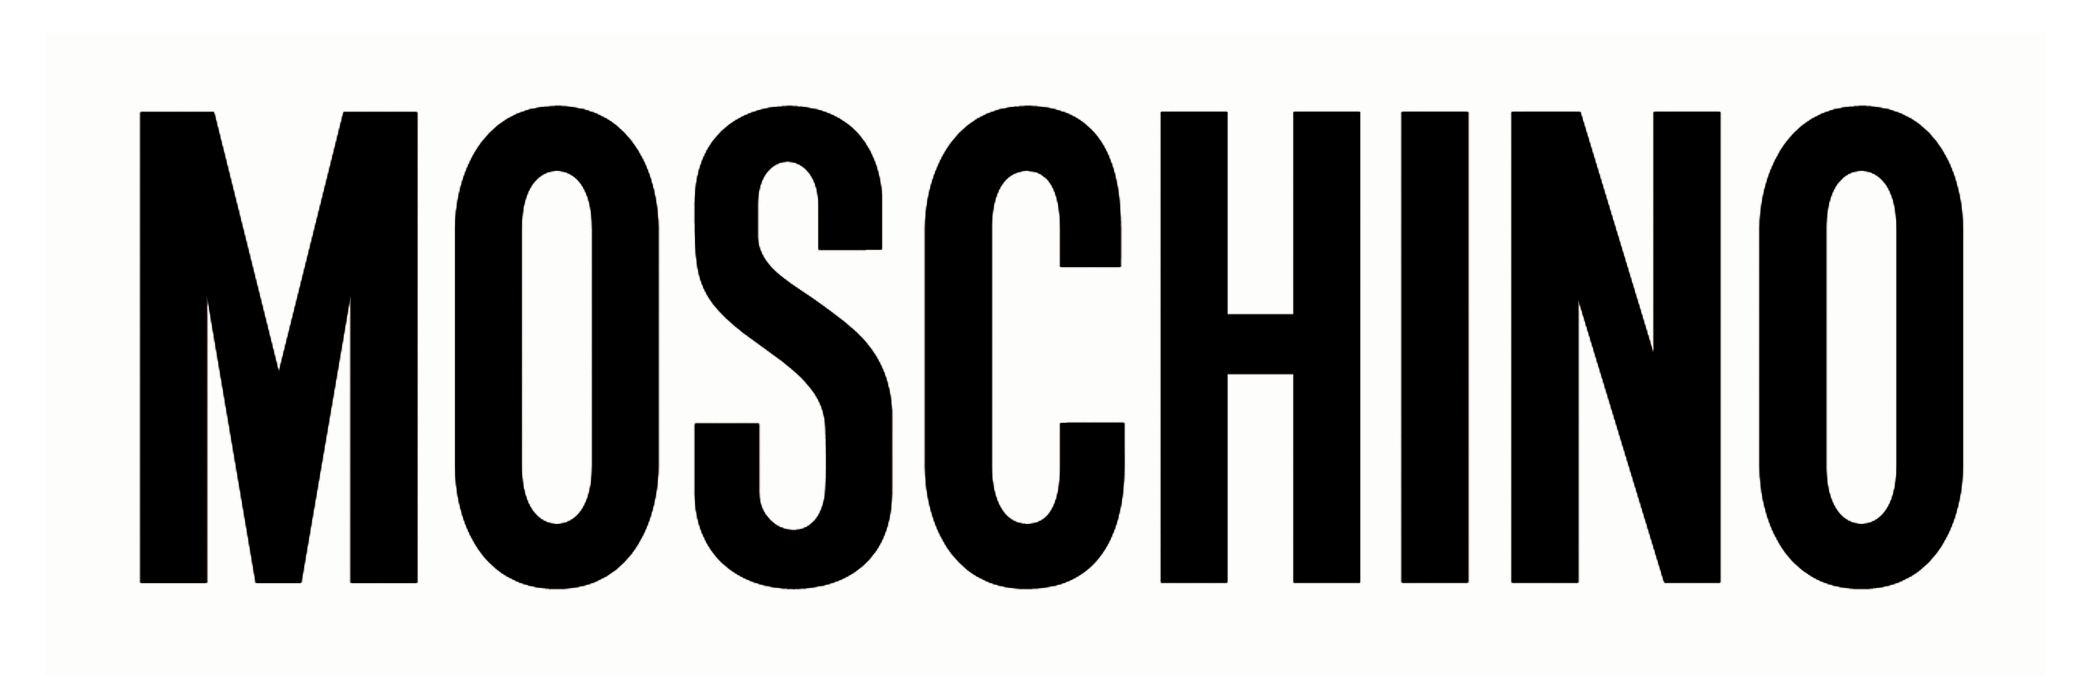 Moschino – Logos Download